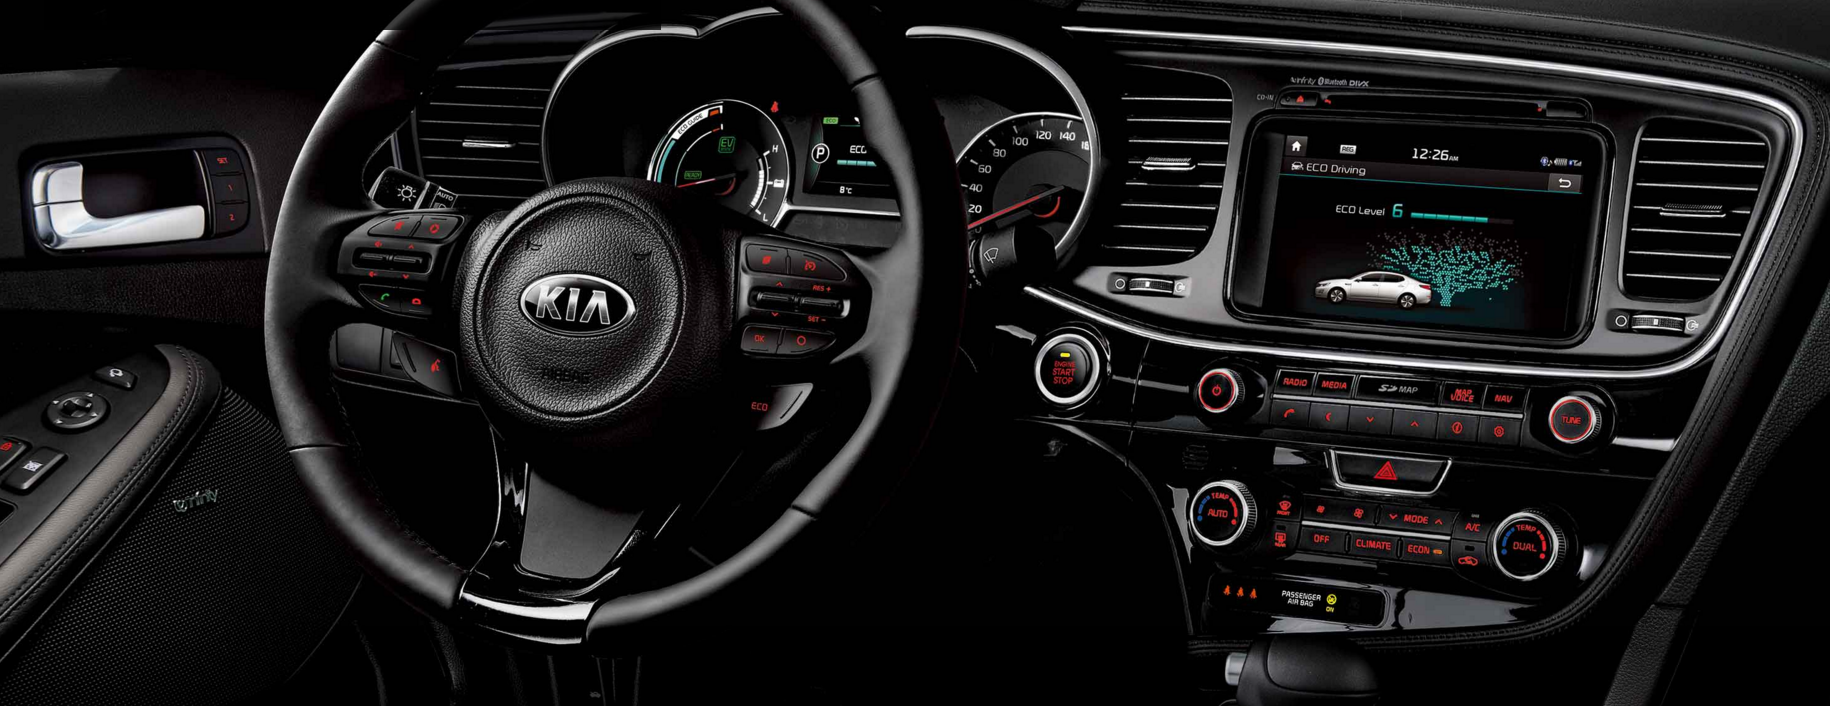 2016 Kia Optima Hybrid Interior Dashboard